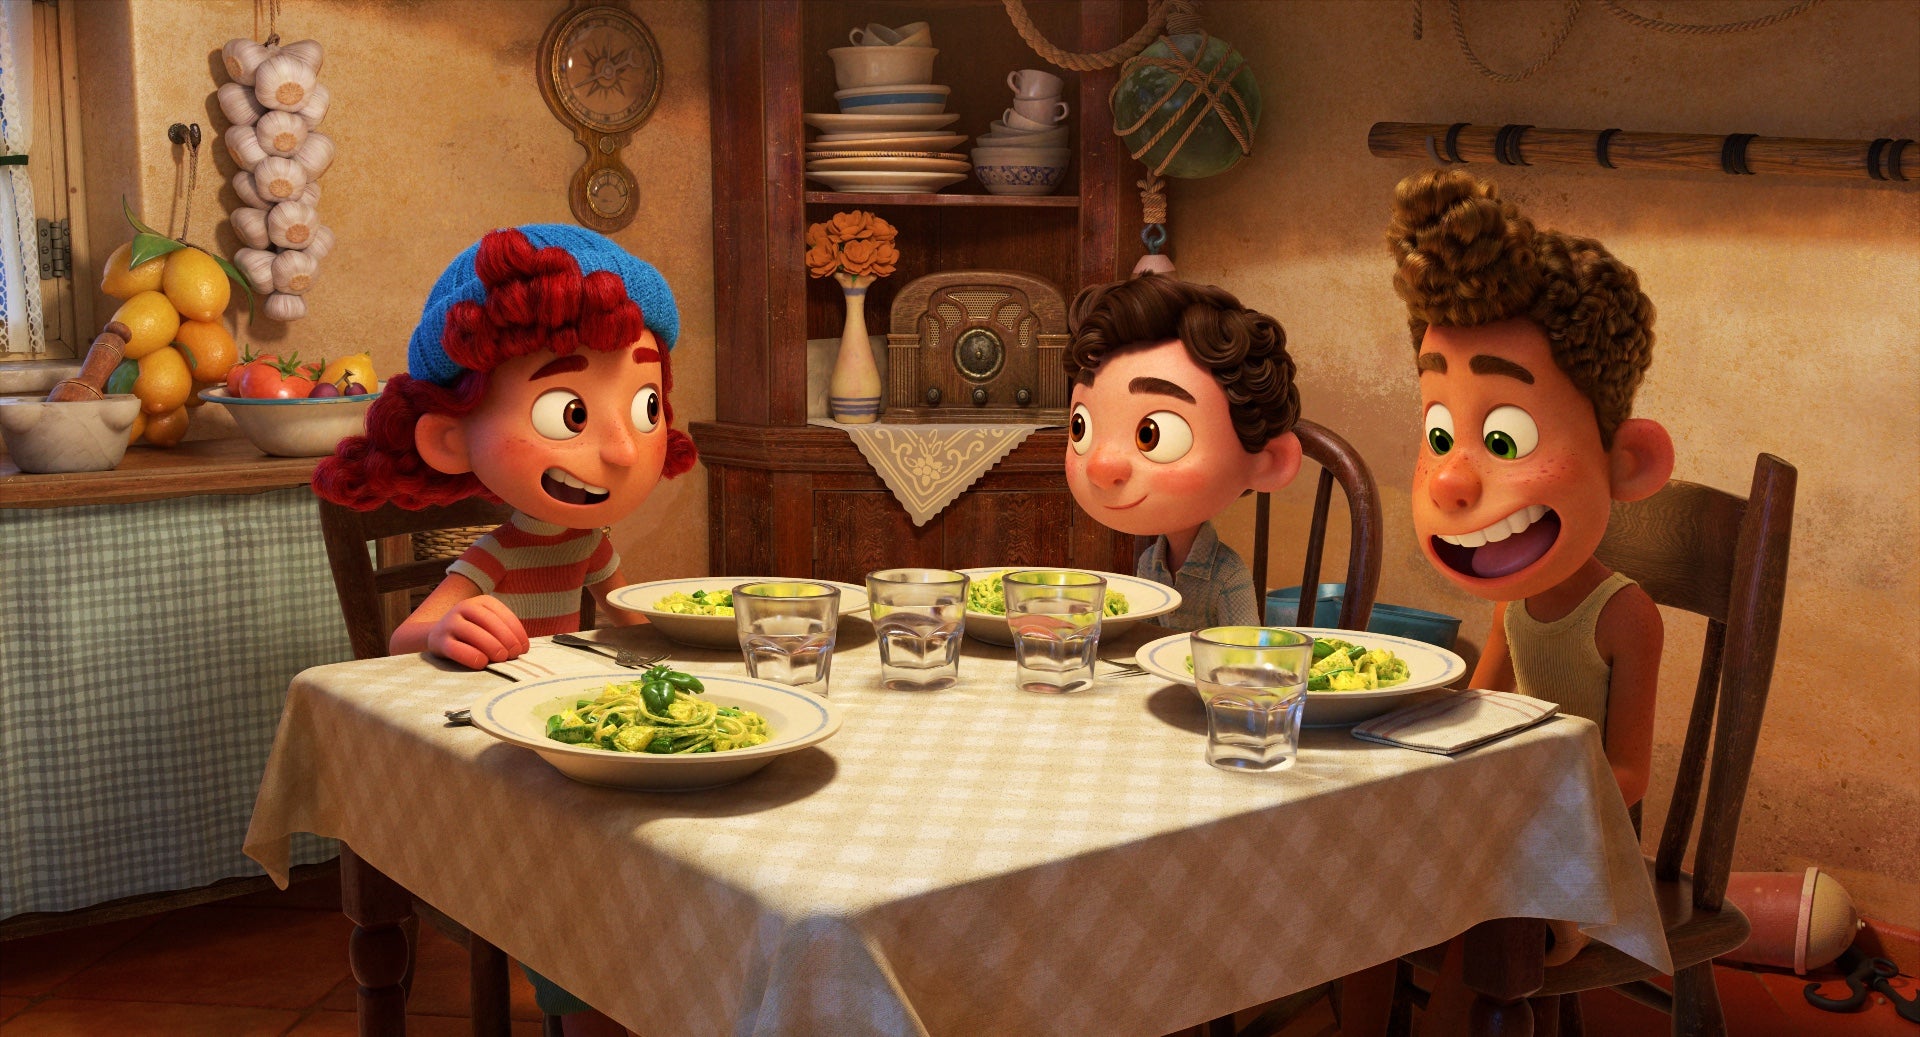 Giulia, Luca, and Alberto enjoy some pasta. (Image: Pixar)